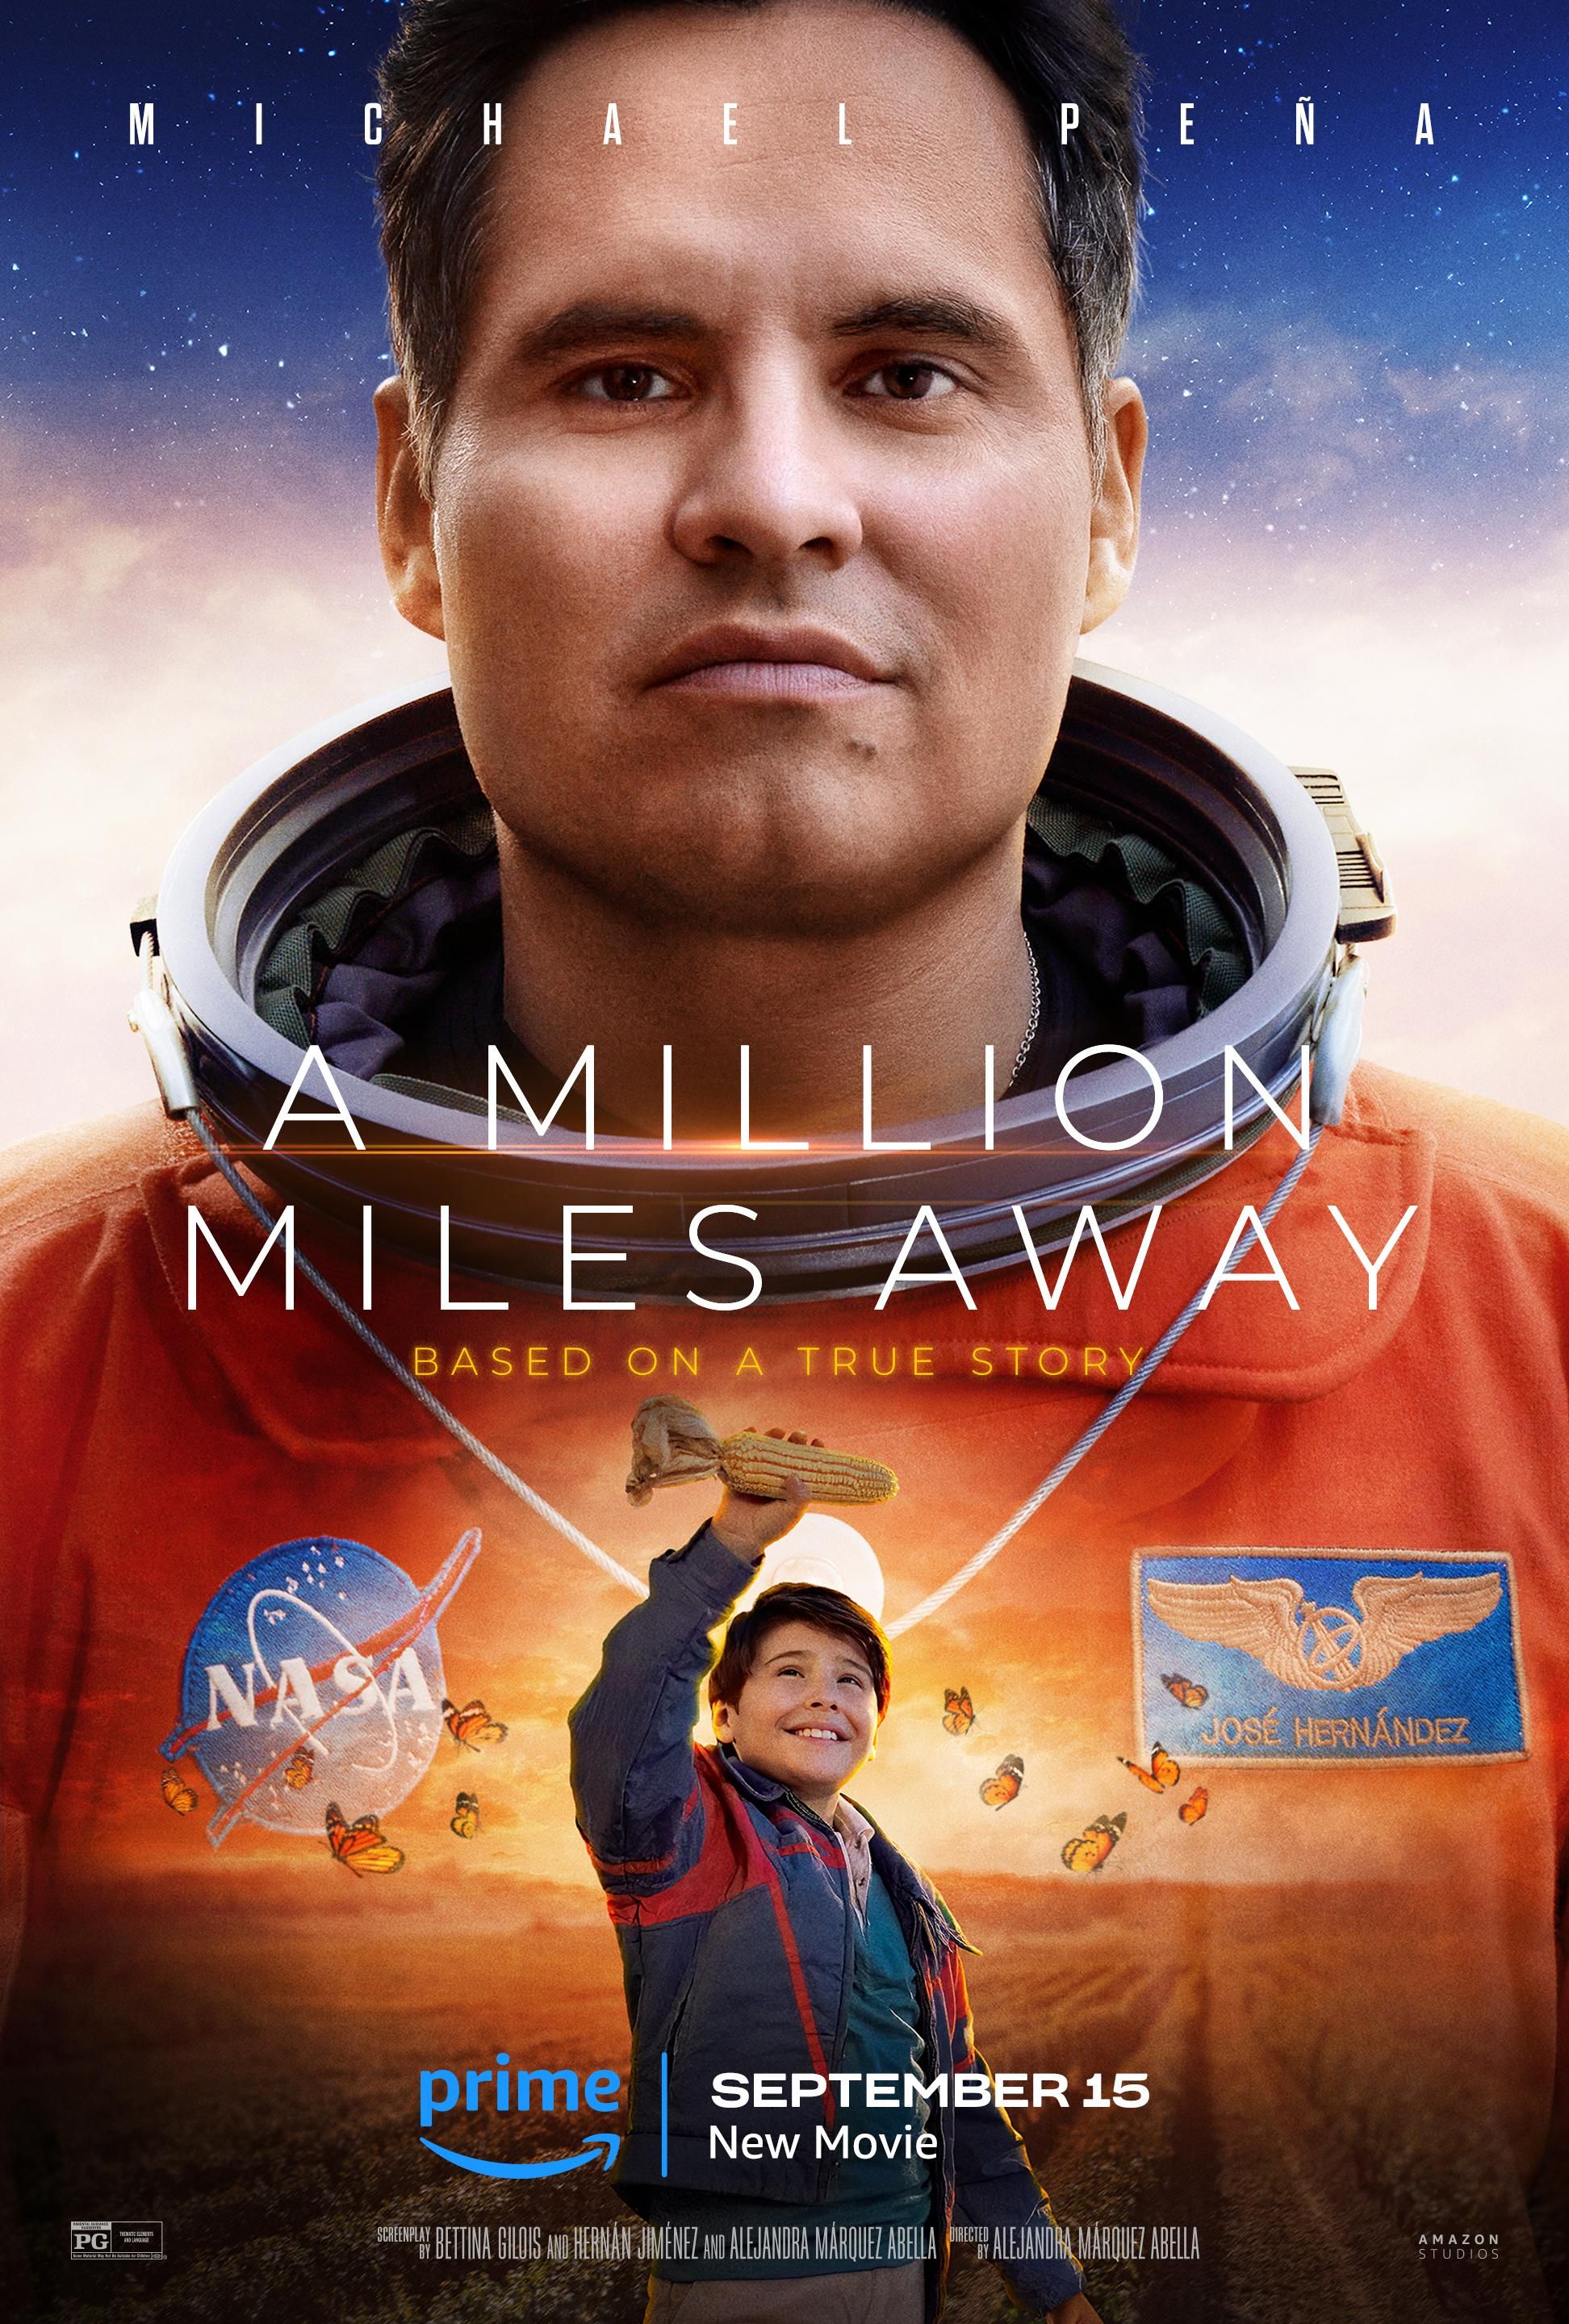 A Million Miles Away Film Poster